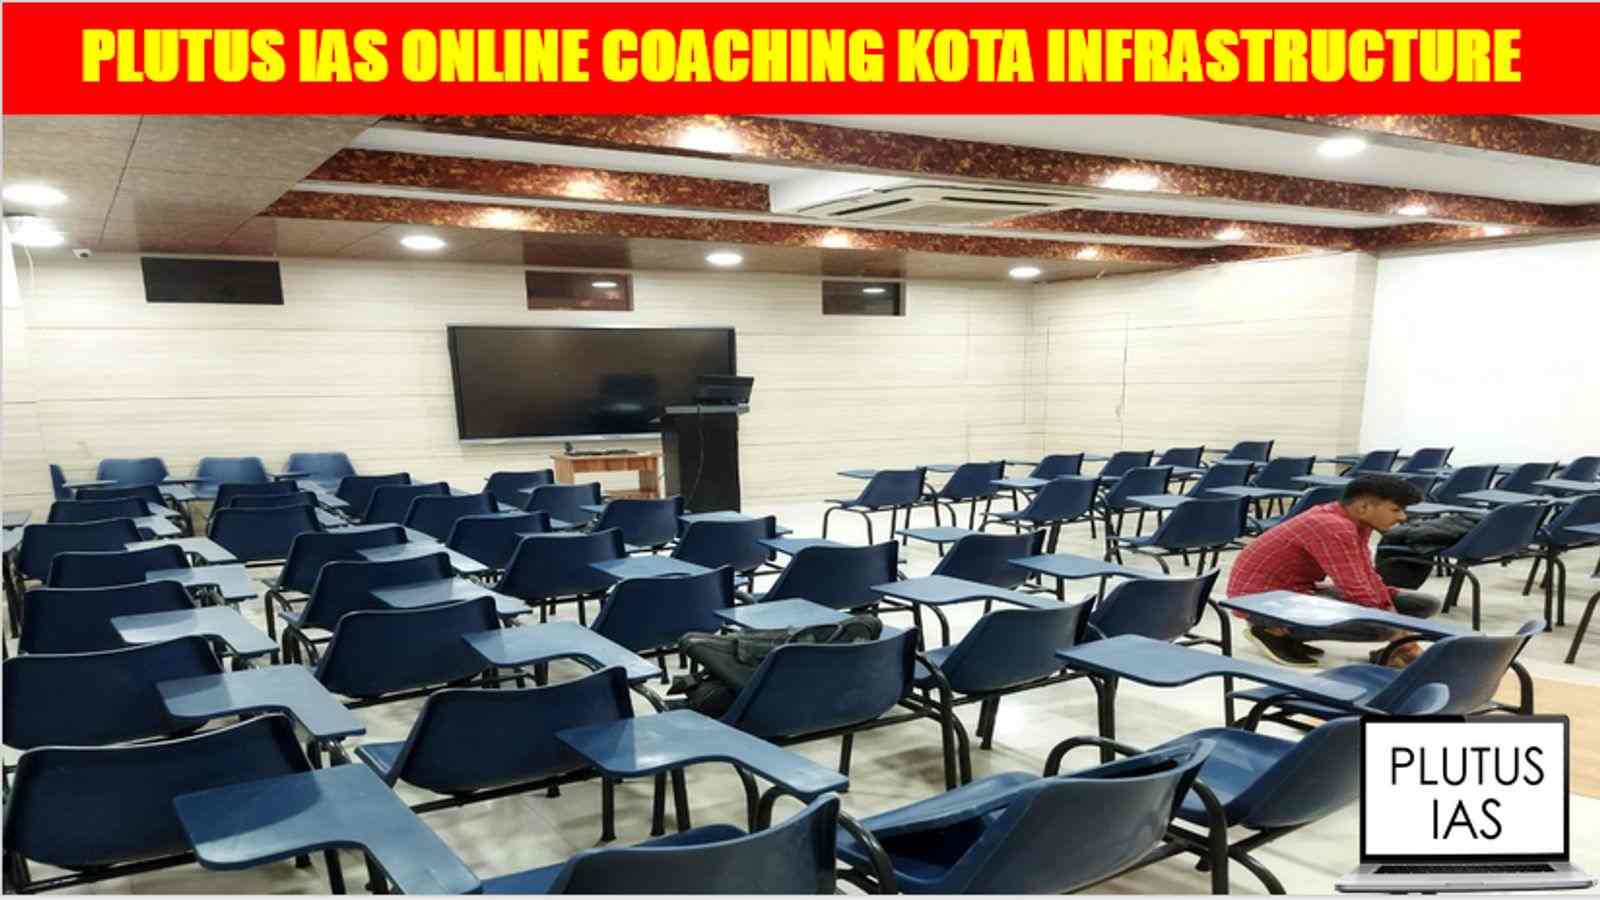 Plutus IAS Online Coaching Kota Infrastructure